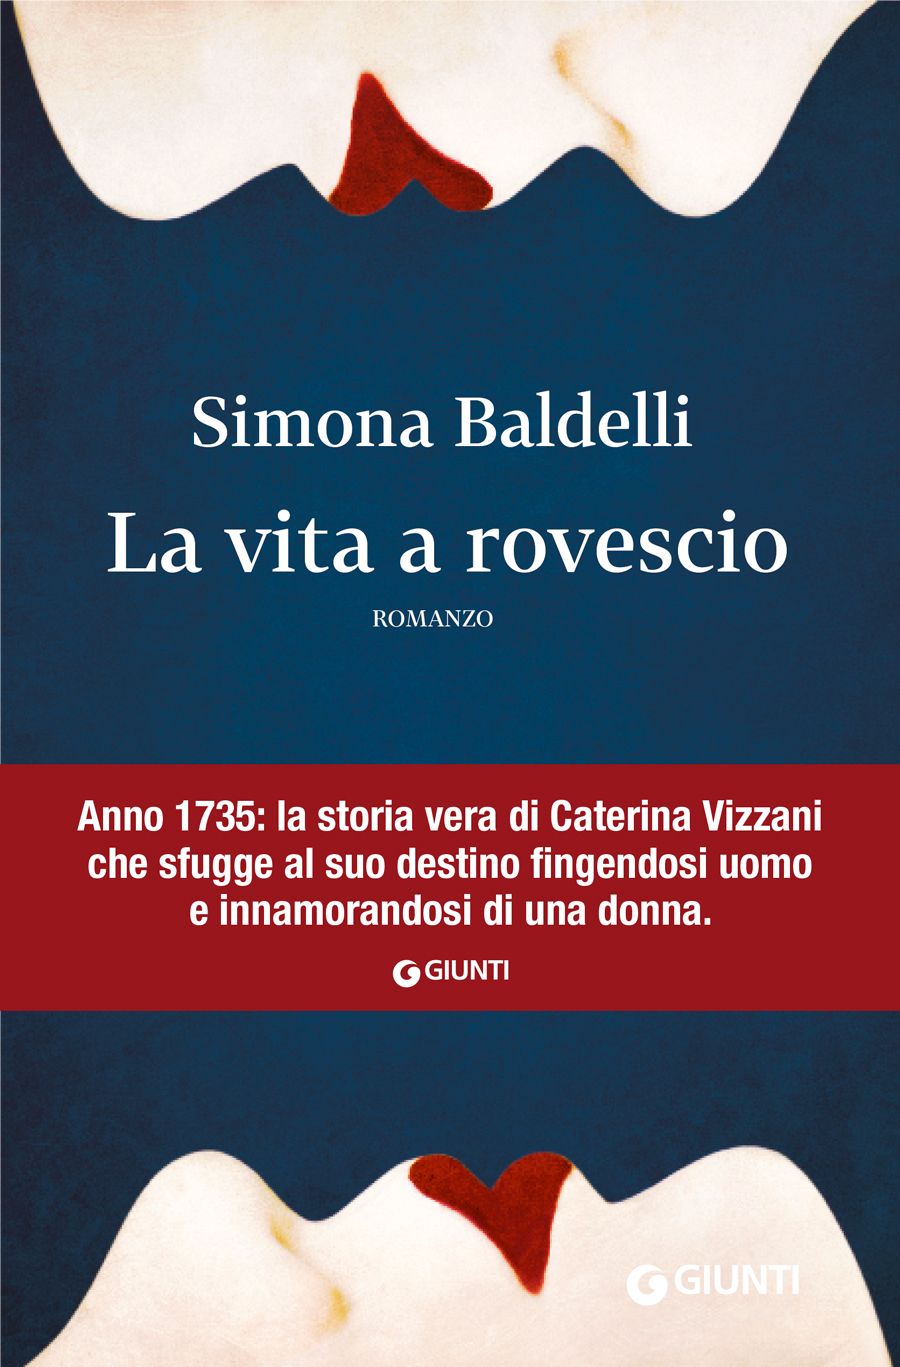 Publication, Carmine, Book, Book cover, Love, Novel, 